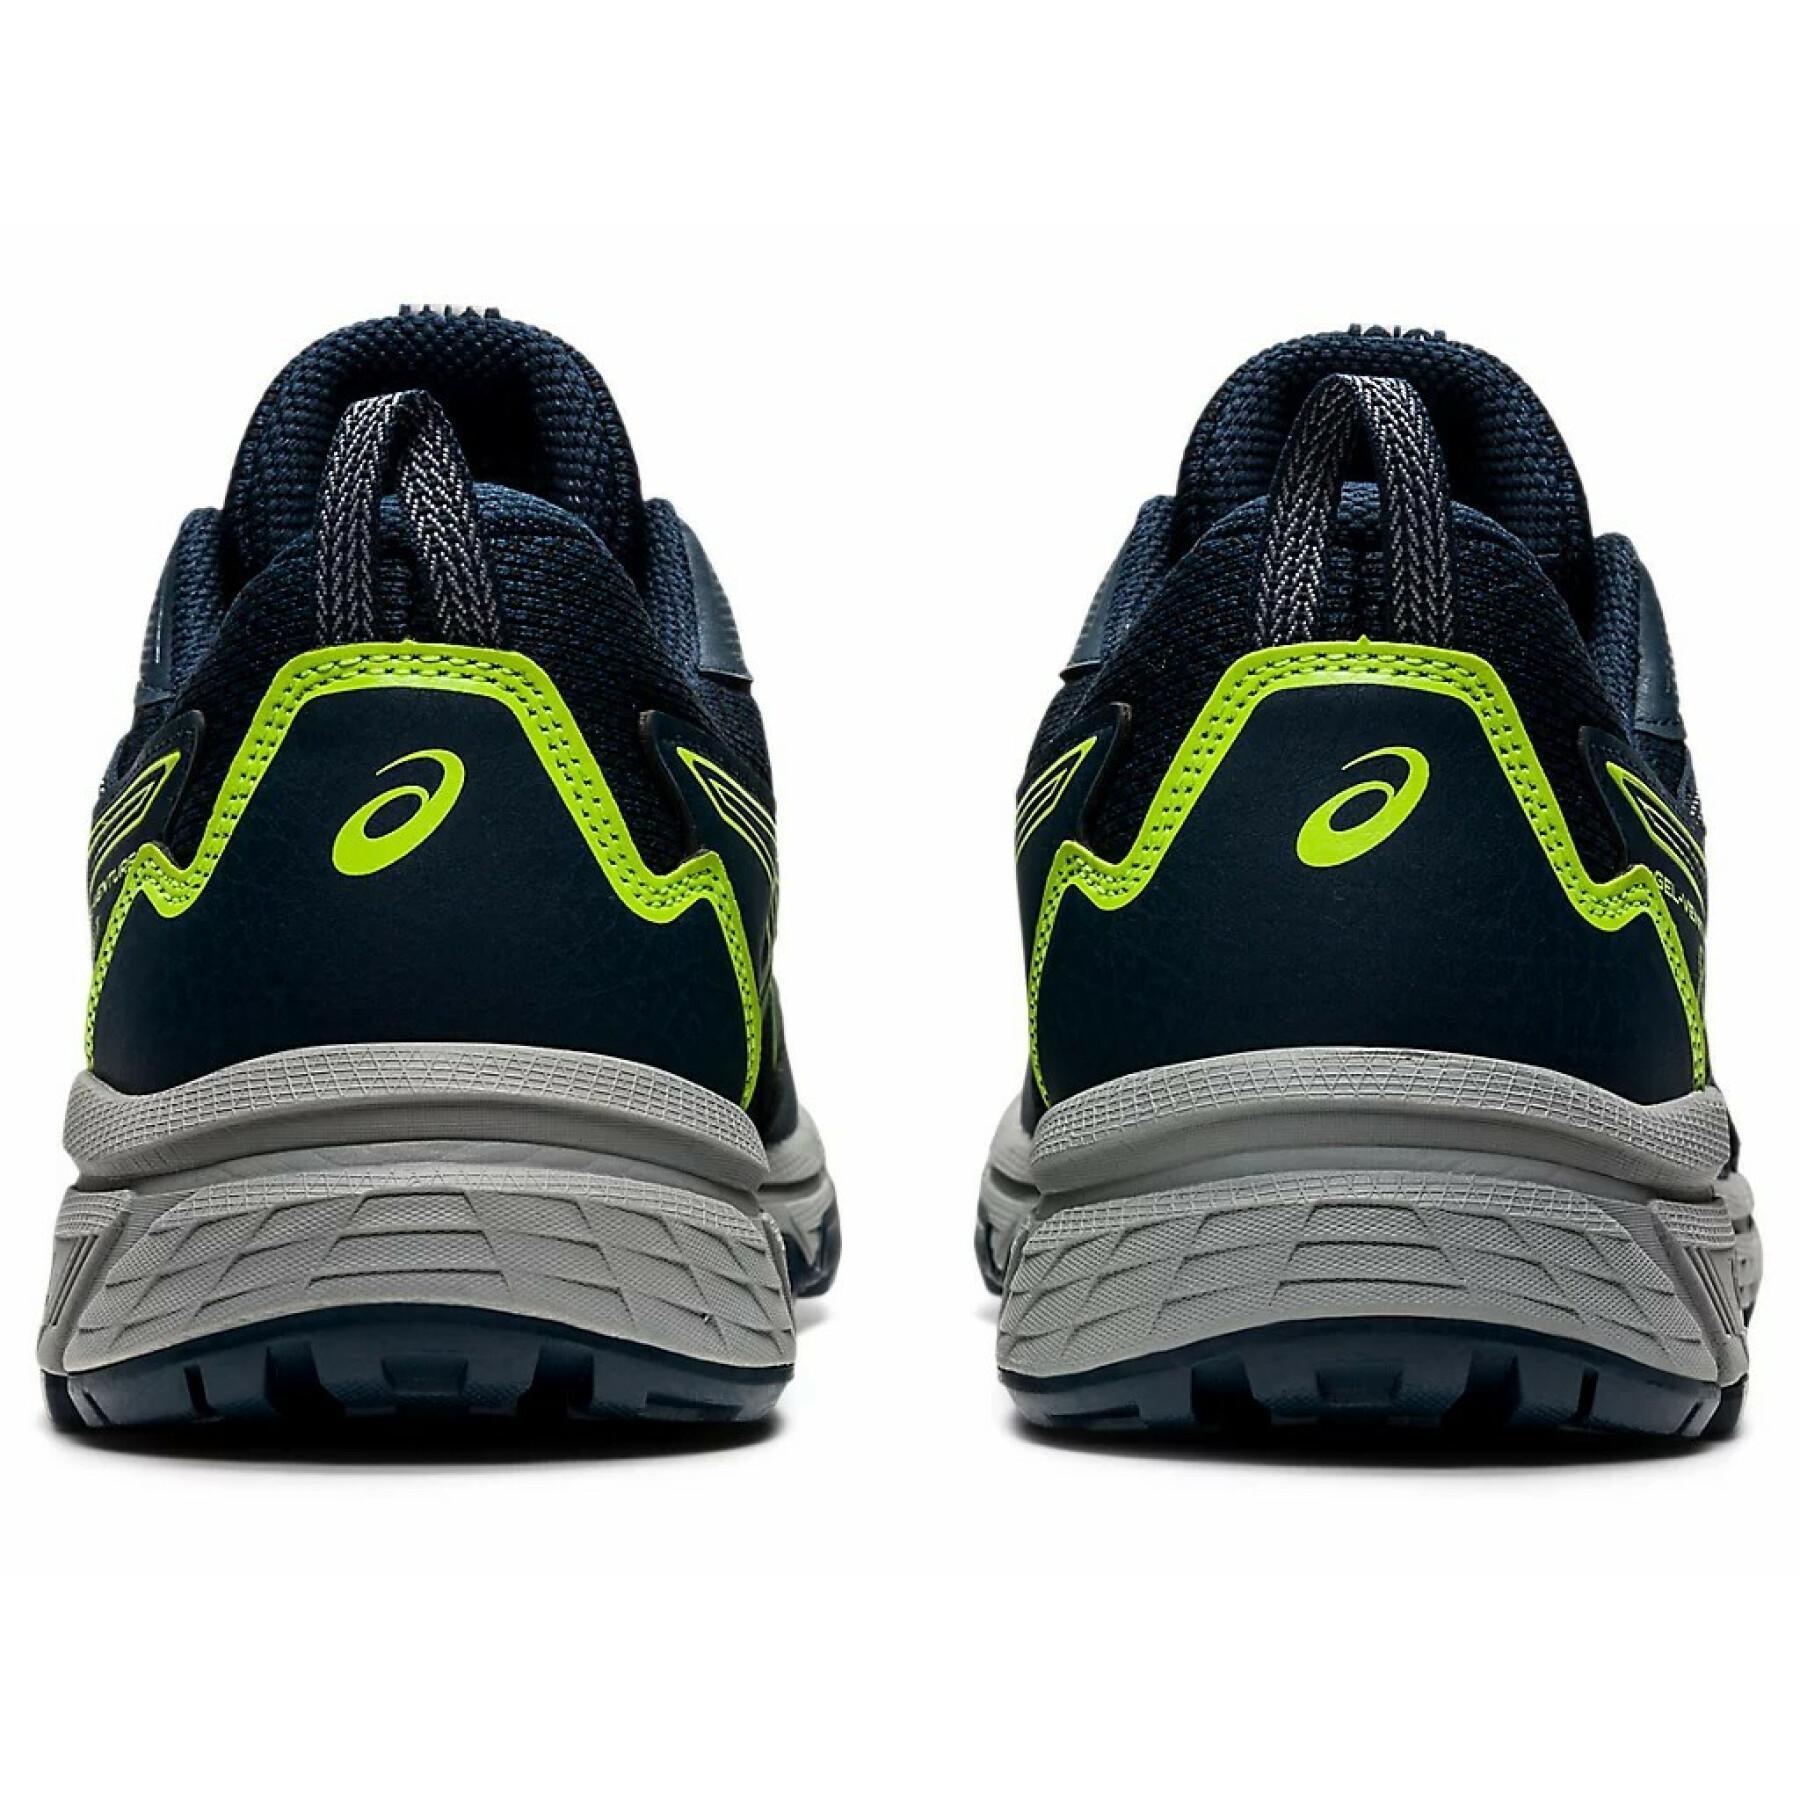 Schuhe Asics Gel-Venture 8